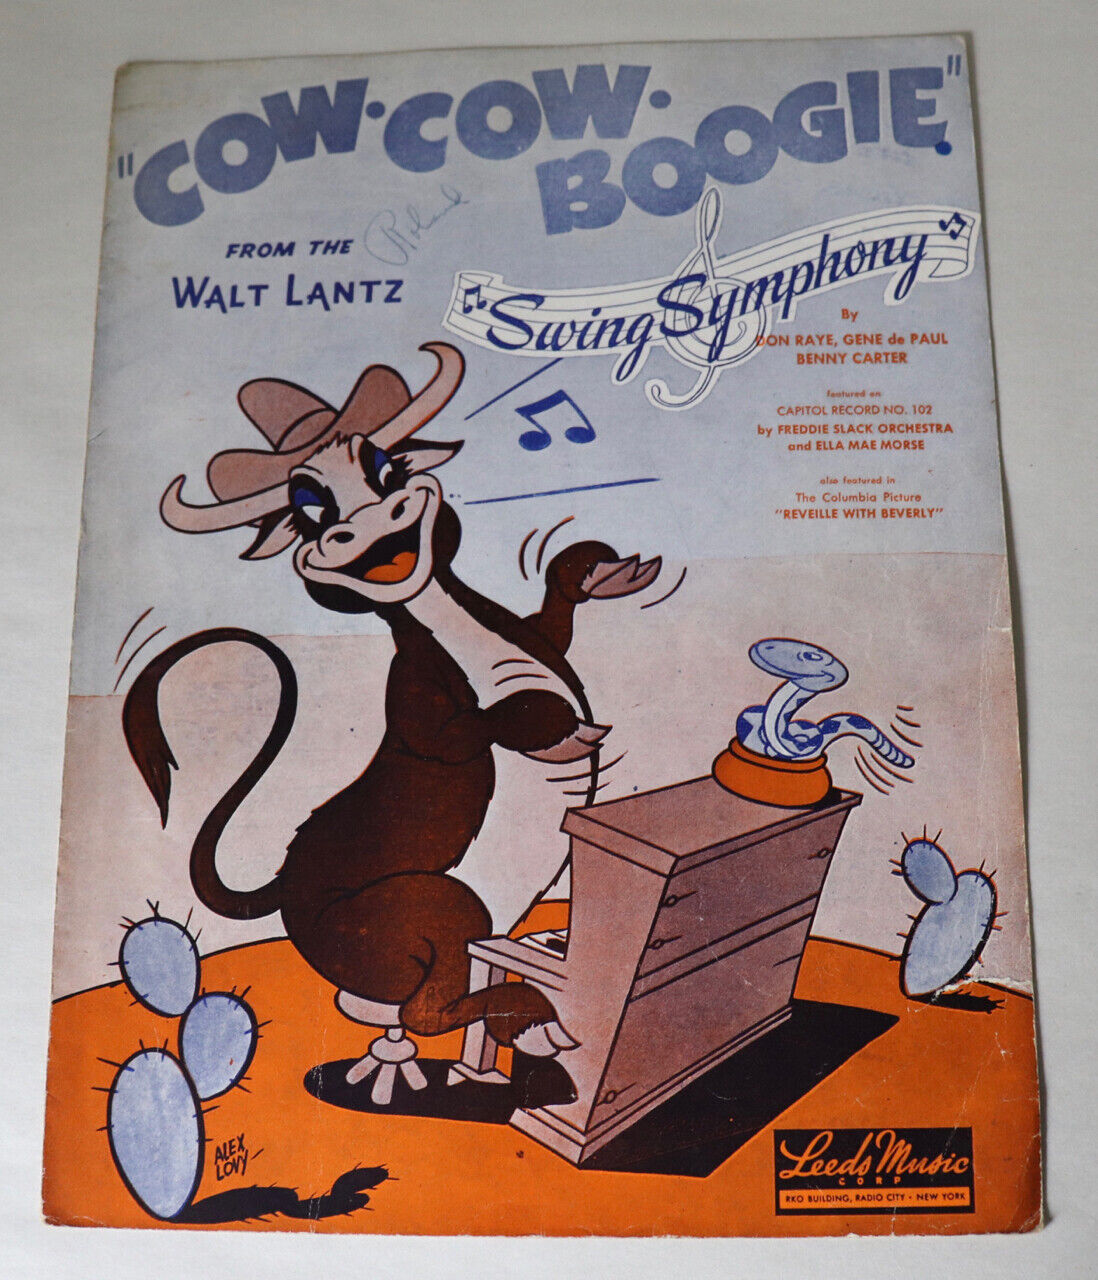 VINTAGE Sheet Music 1942 COW-COWBOOGIE Walter Lantz